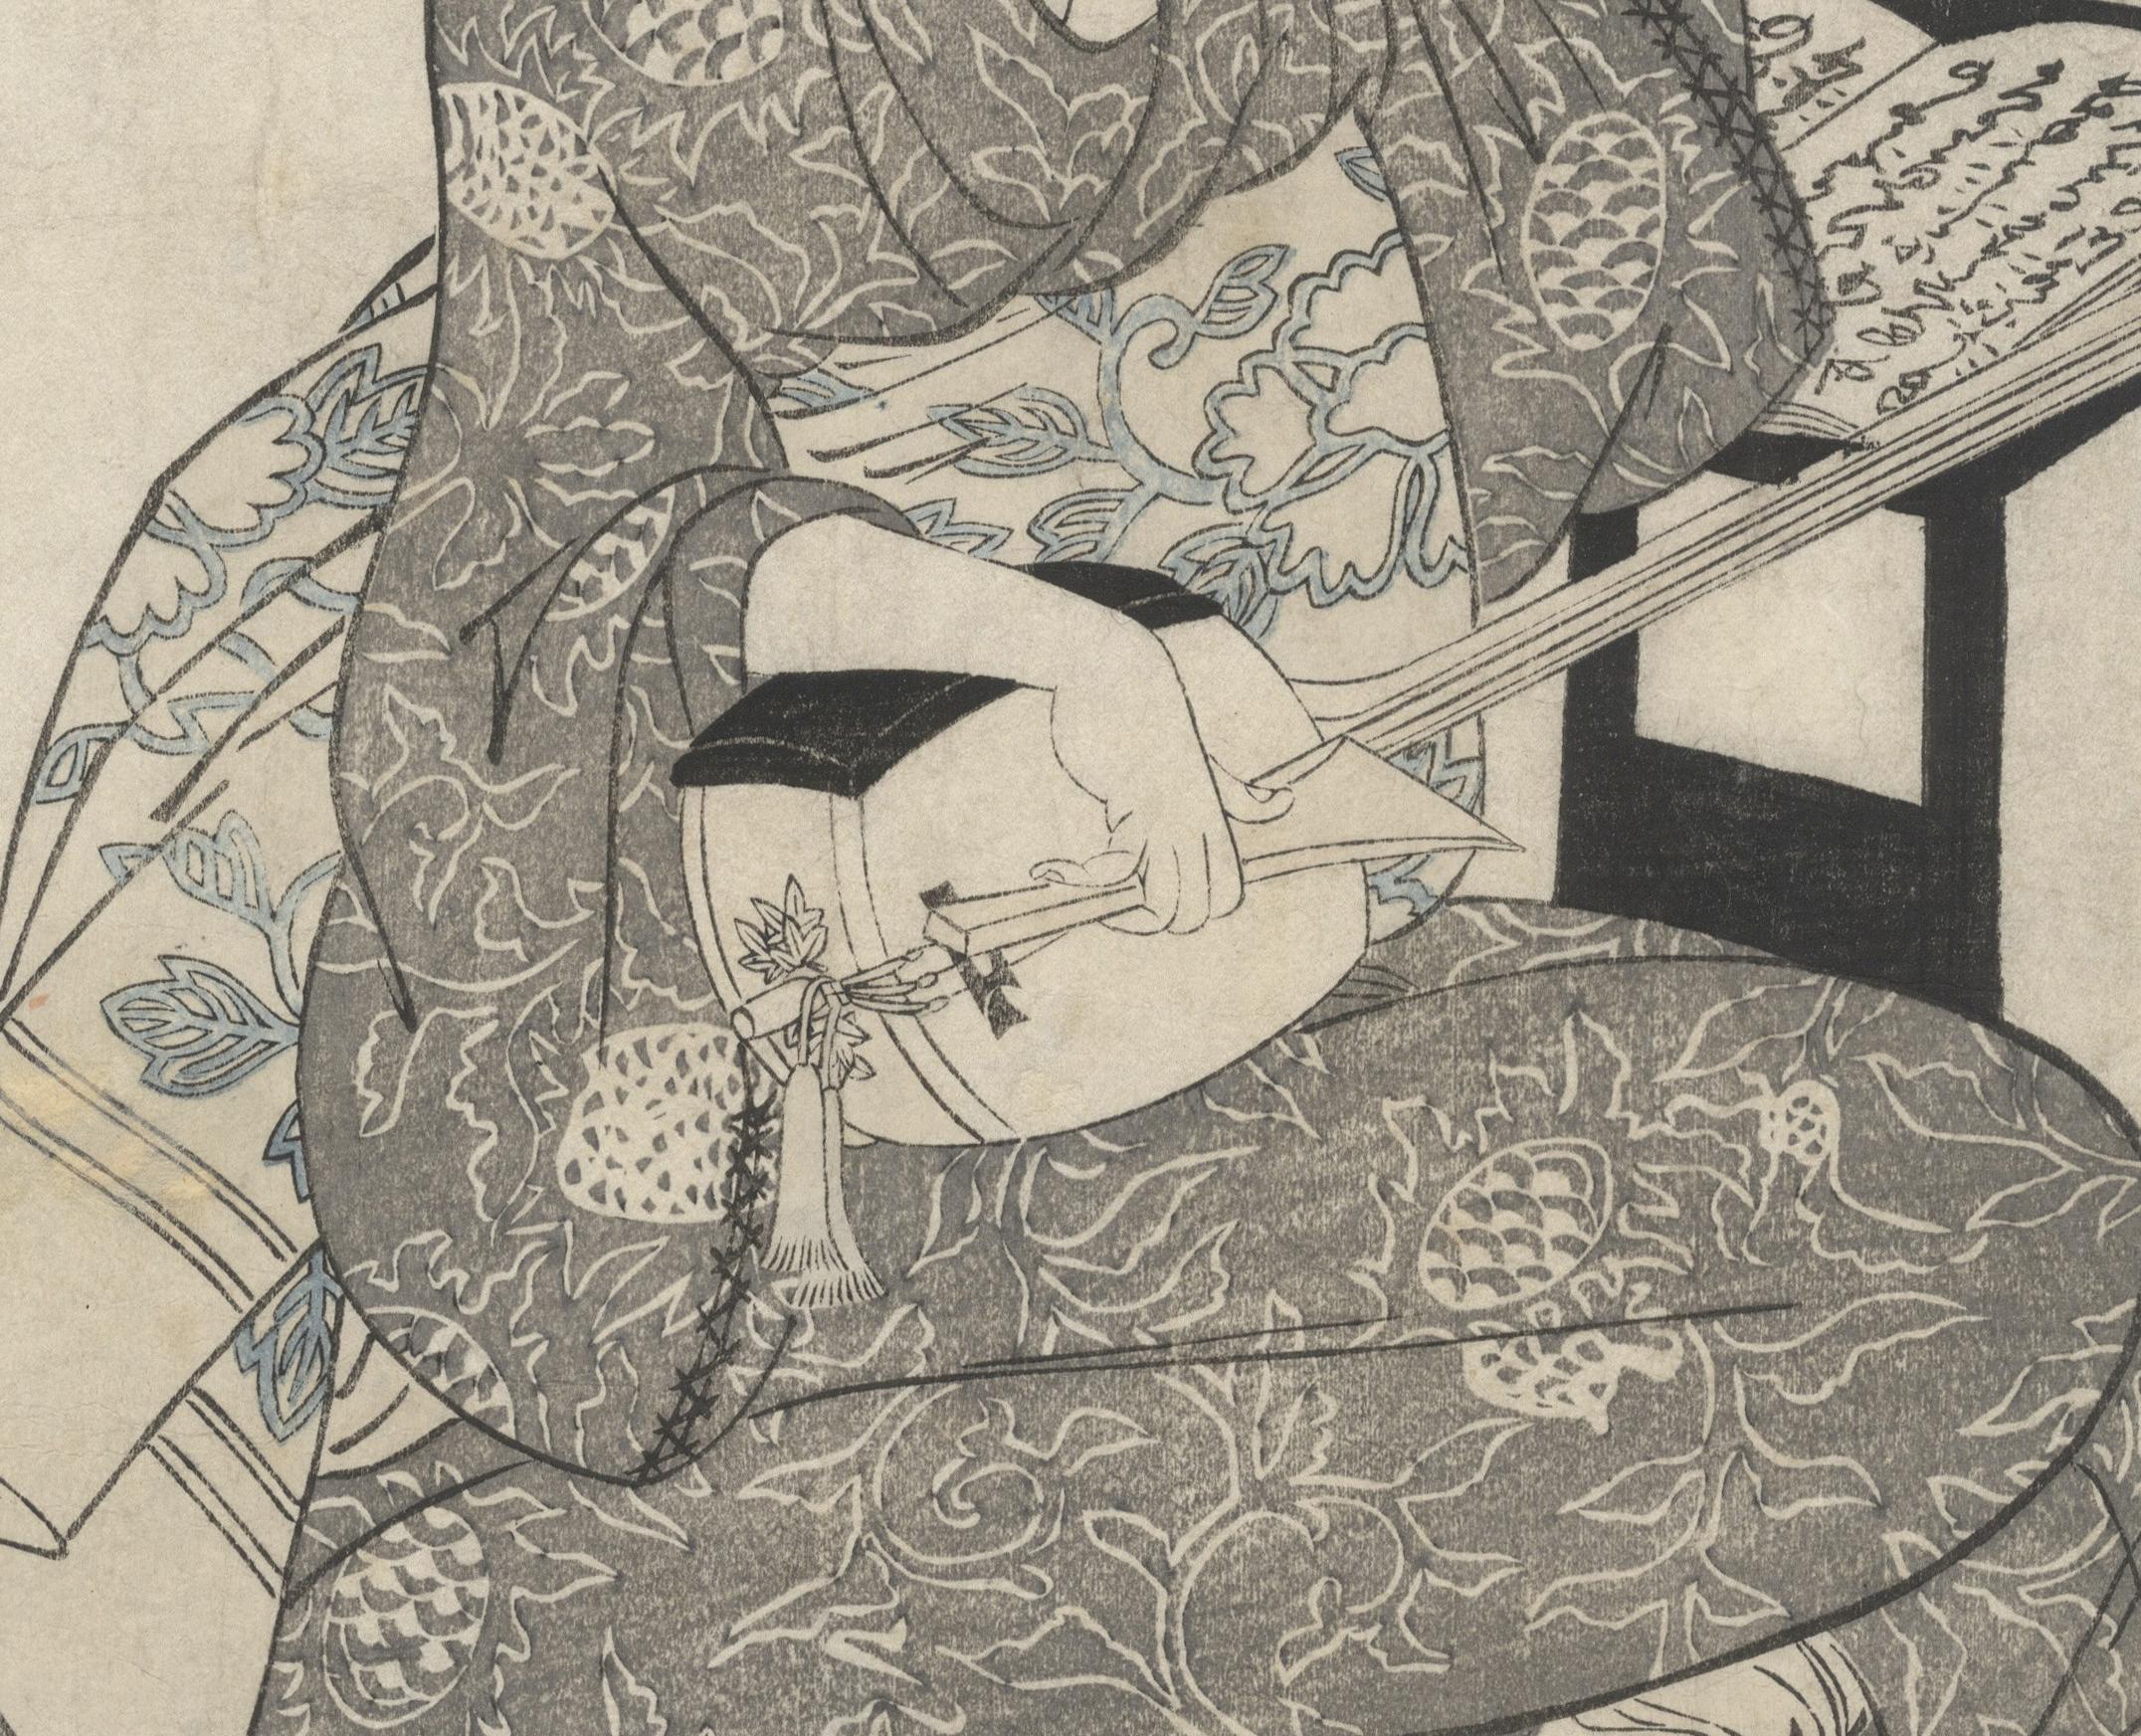 18th century japanese woodblock prints